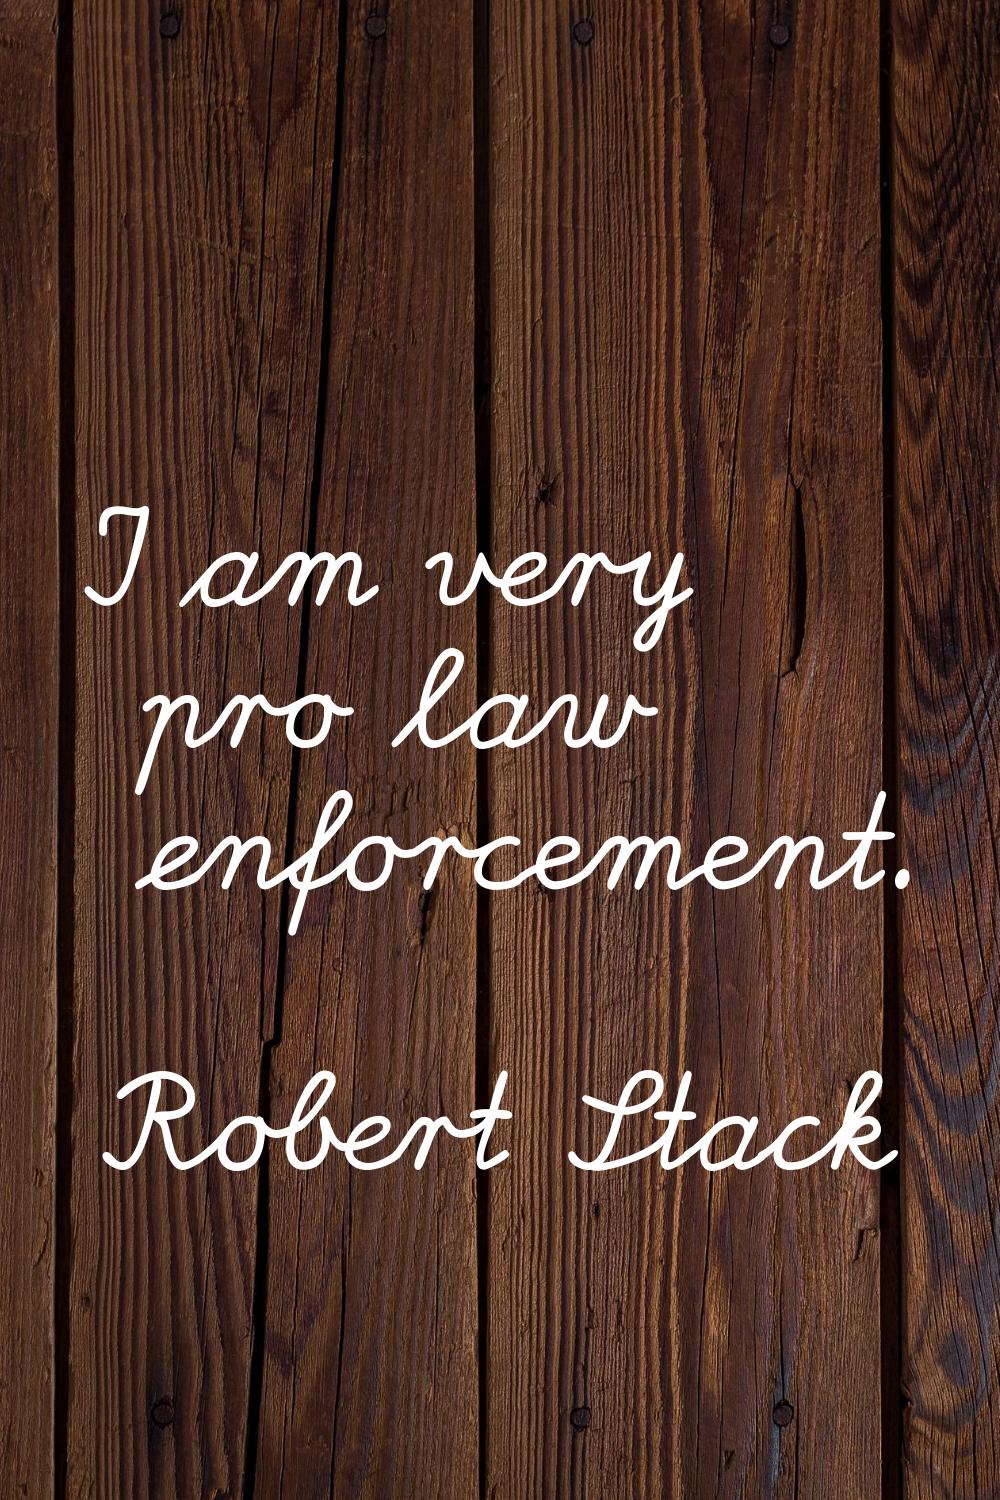 I am very pro law enforcement.